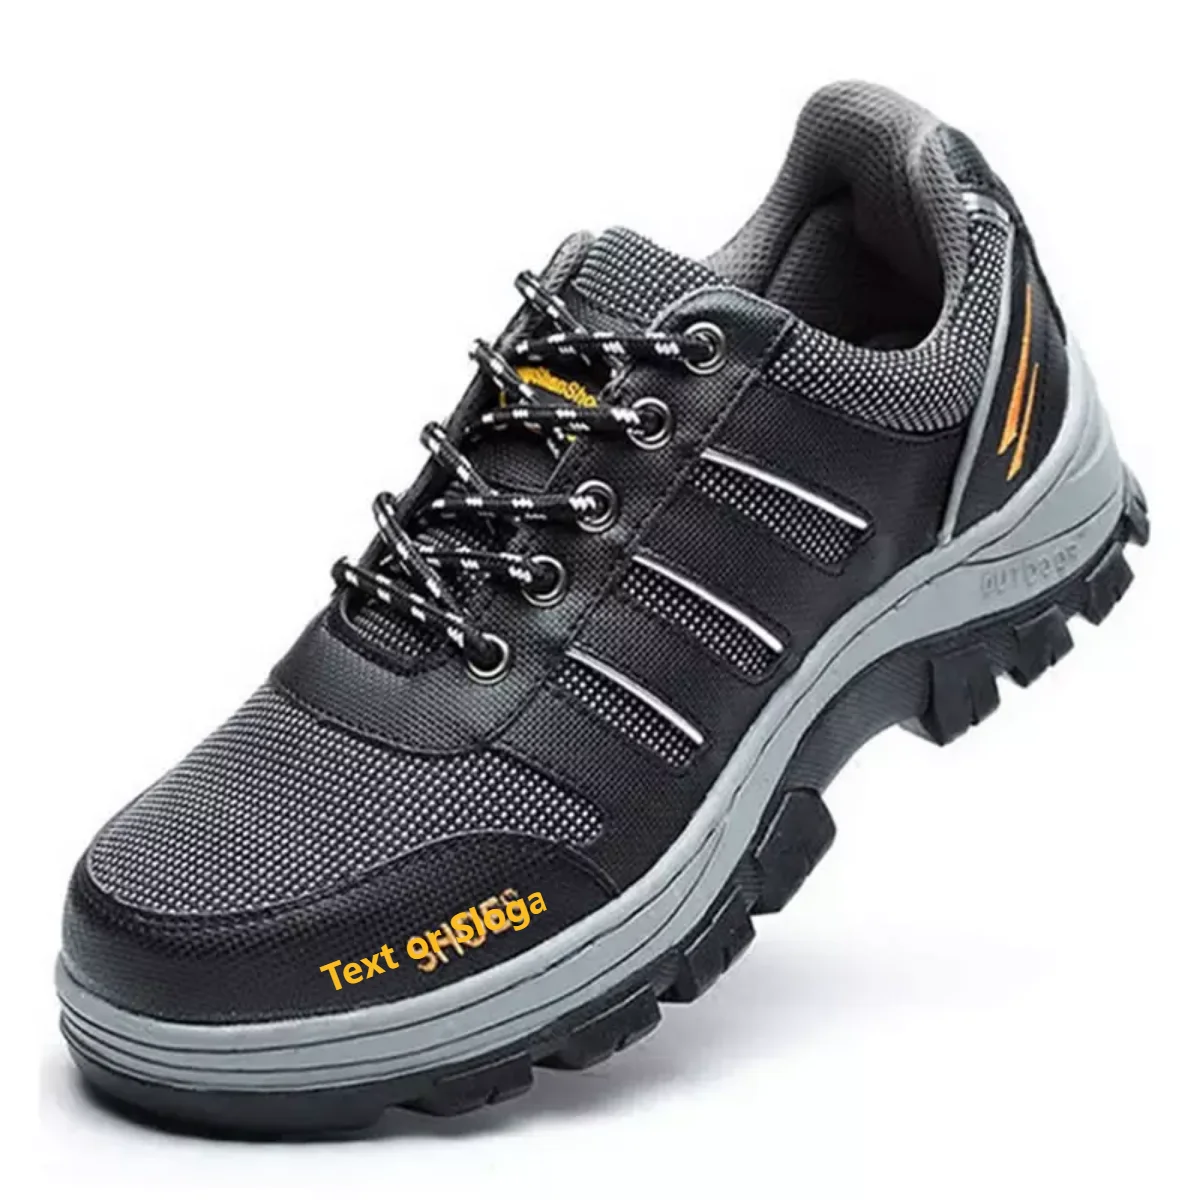 Hiking Pro Safety Shoes s3 work shoe Black Trekking style 